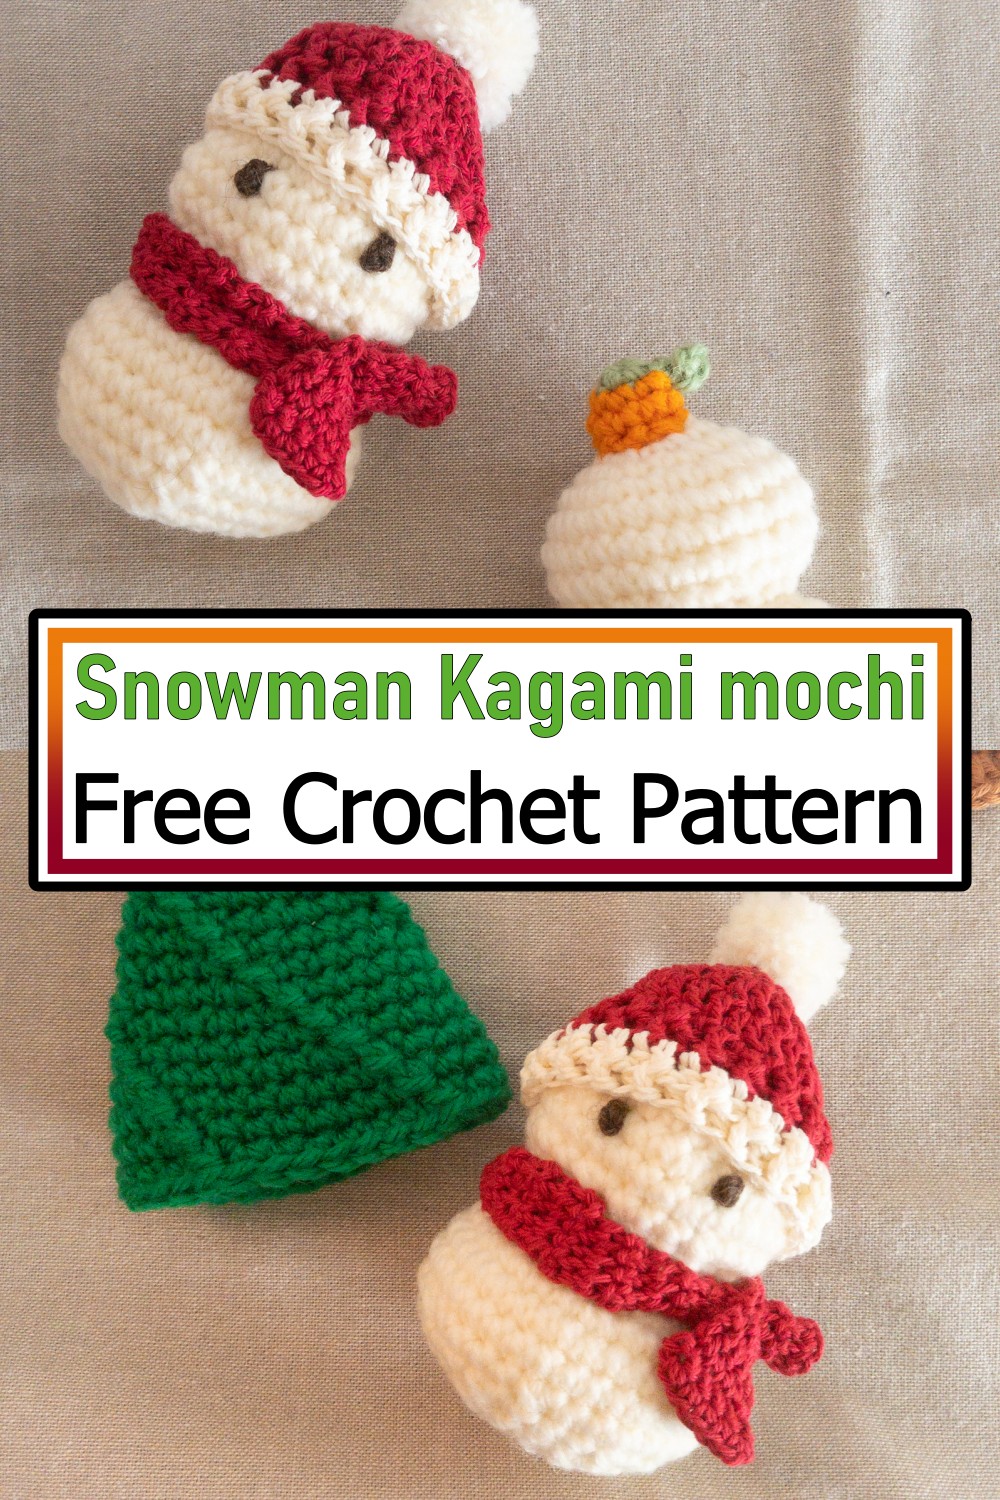 Snowman Kagami mochi